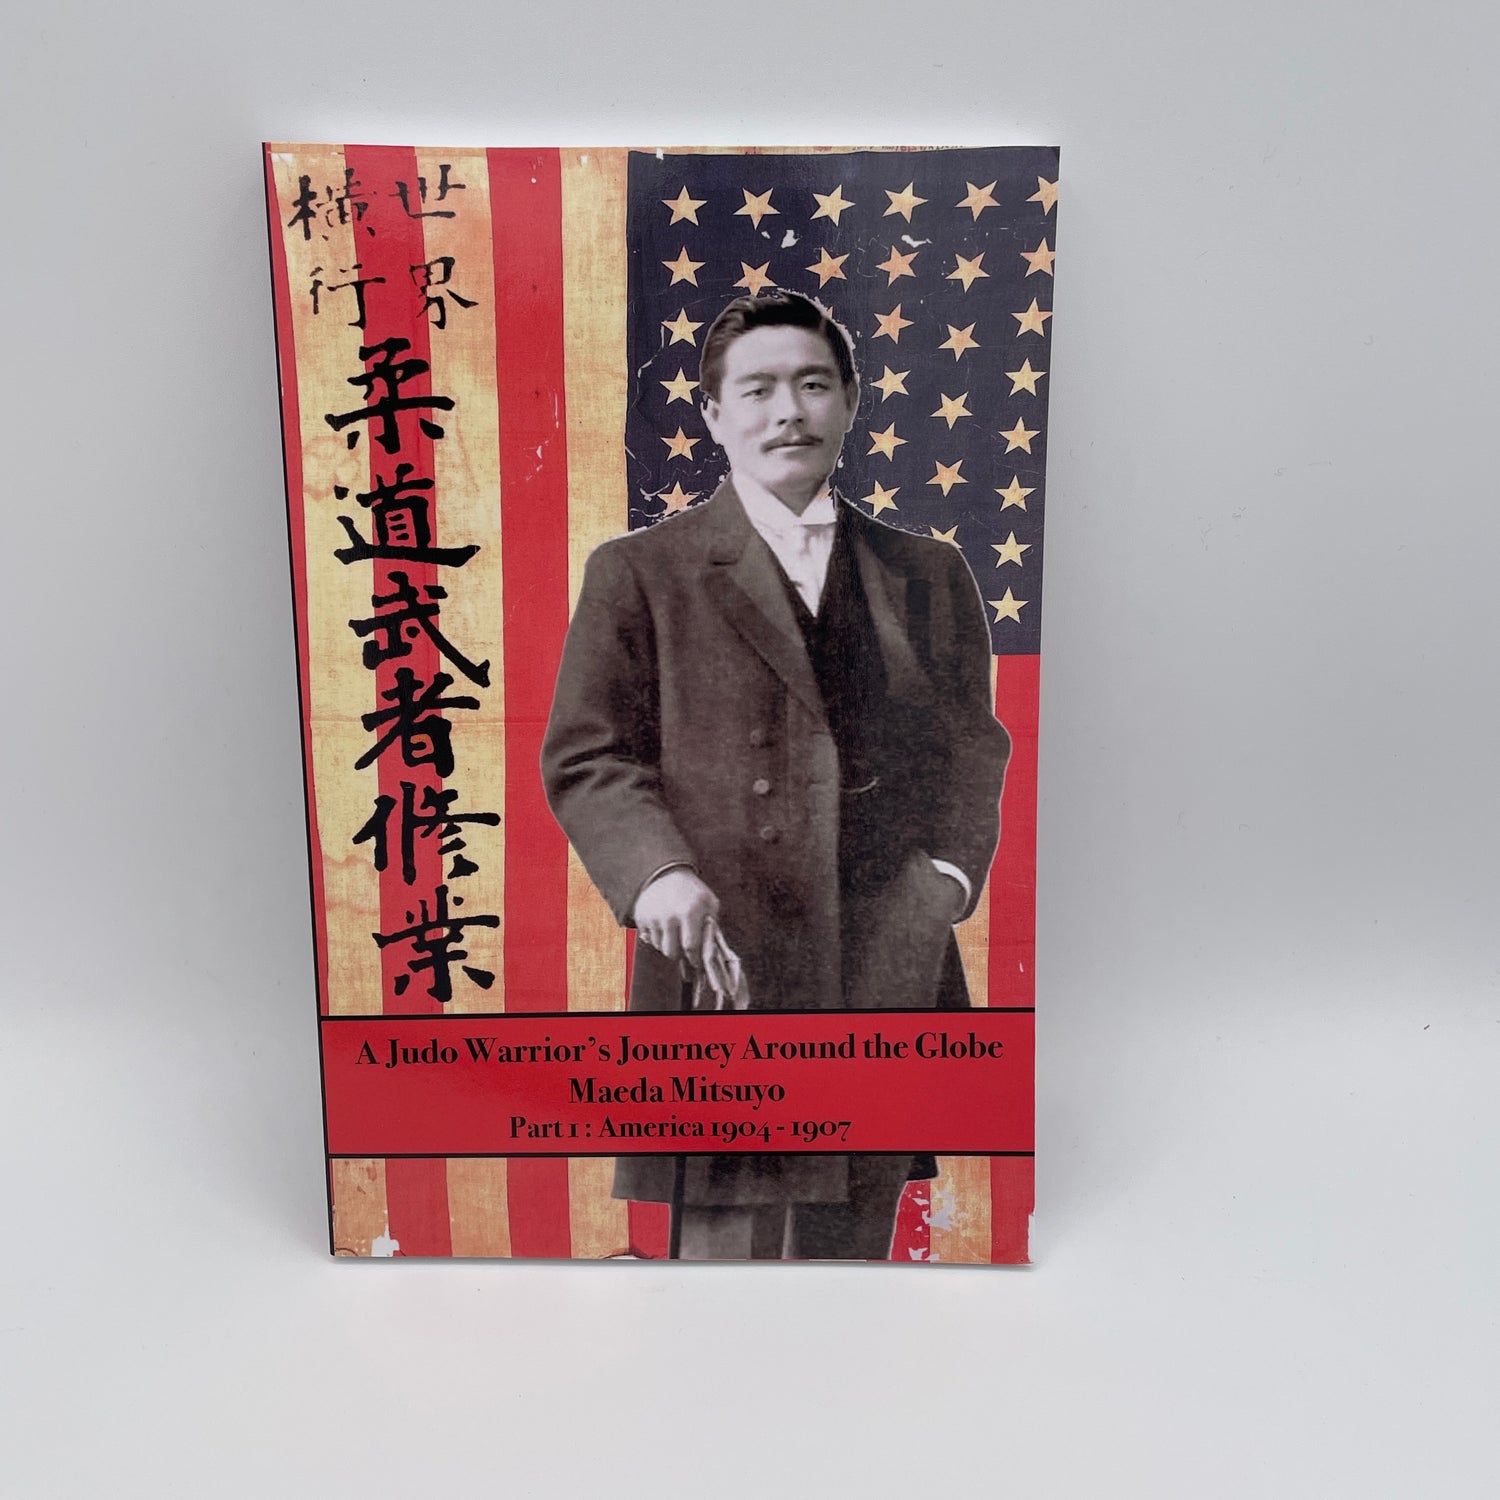 A Judo Warrior's Journey Around the Globe: America 1904-1907 by Mitsuyo Maeda